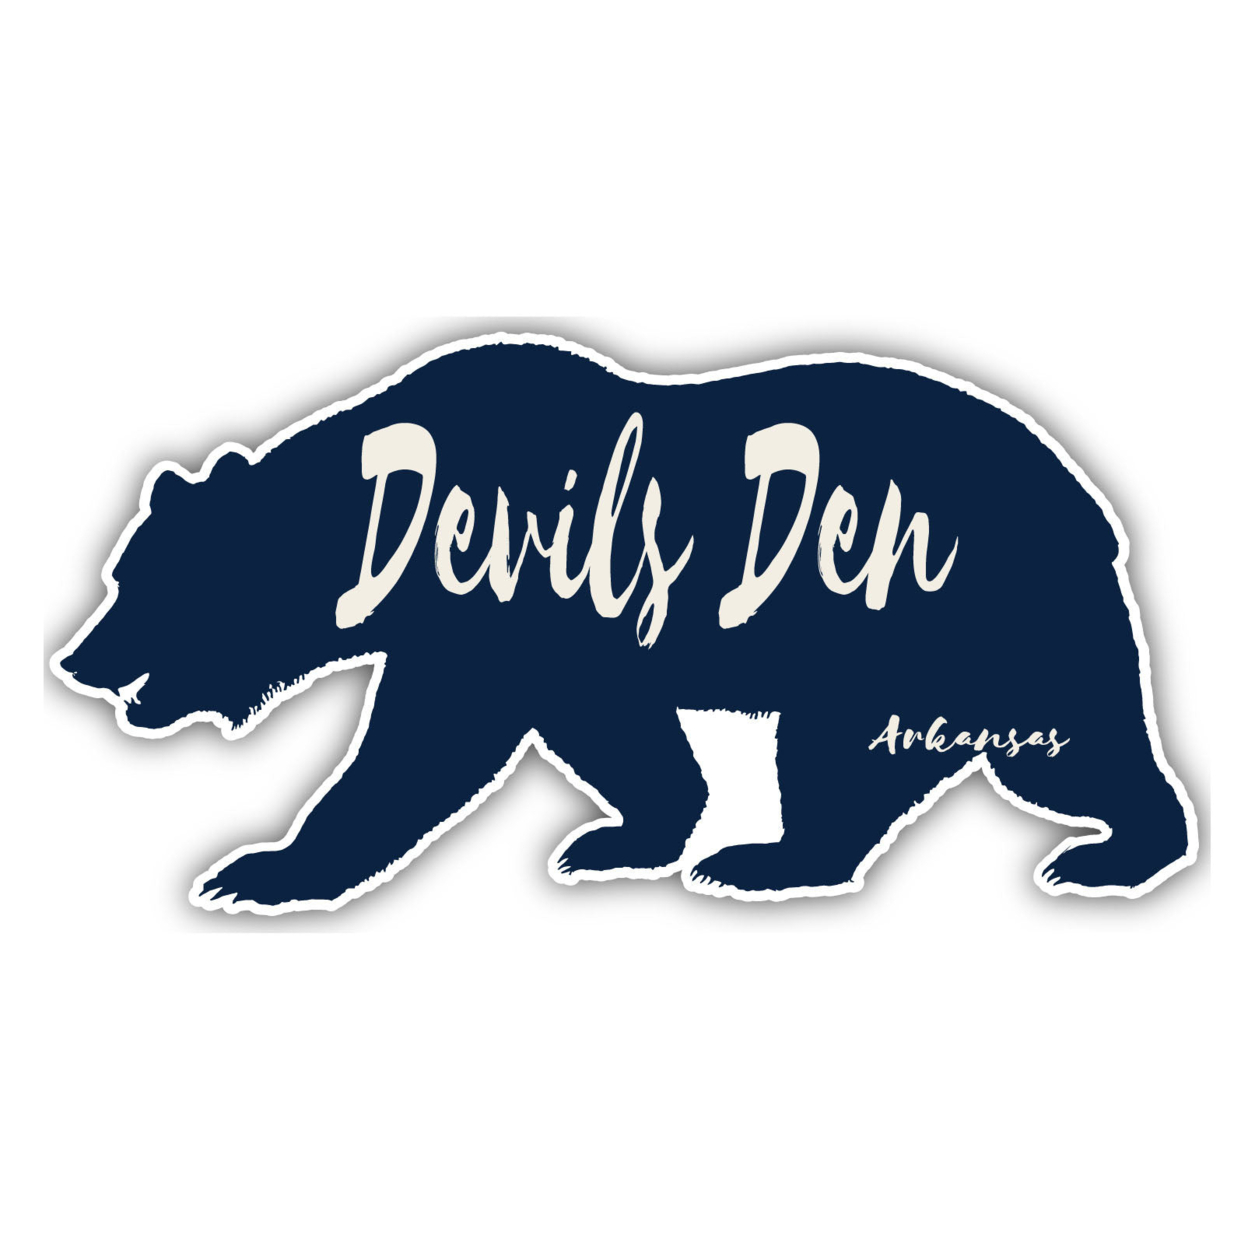 Devils Den Arkansas Souvenir Decorative Stickers (Choose Theme And Size) - 4-Pack, 6-Inch, Great Outdoors